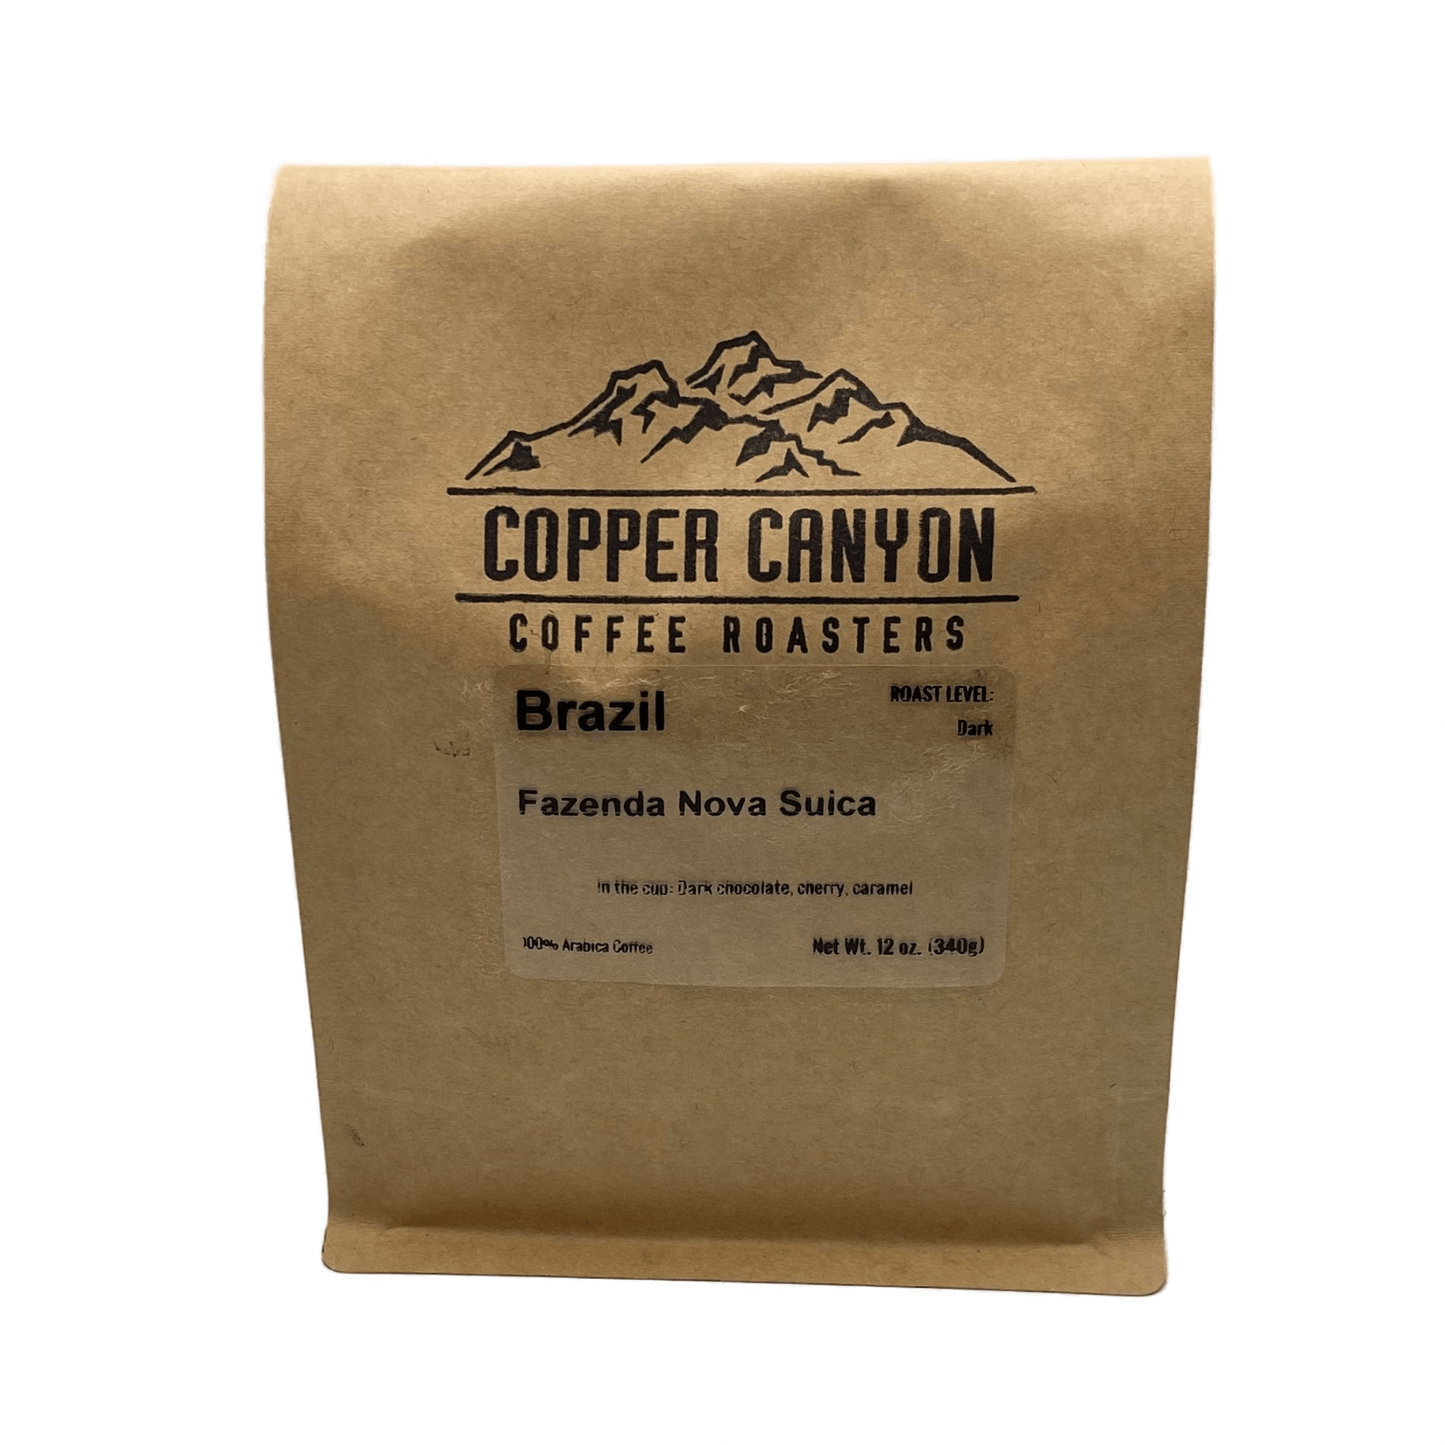 12 oz bag of Brazil single origin, dark roast coffee